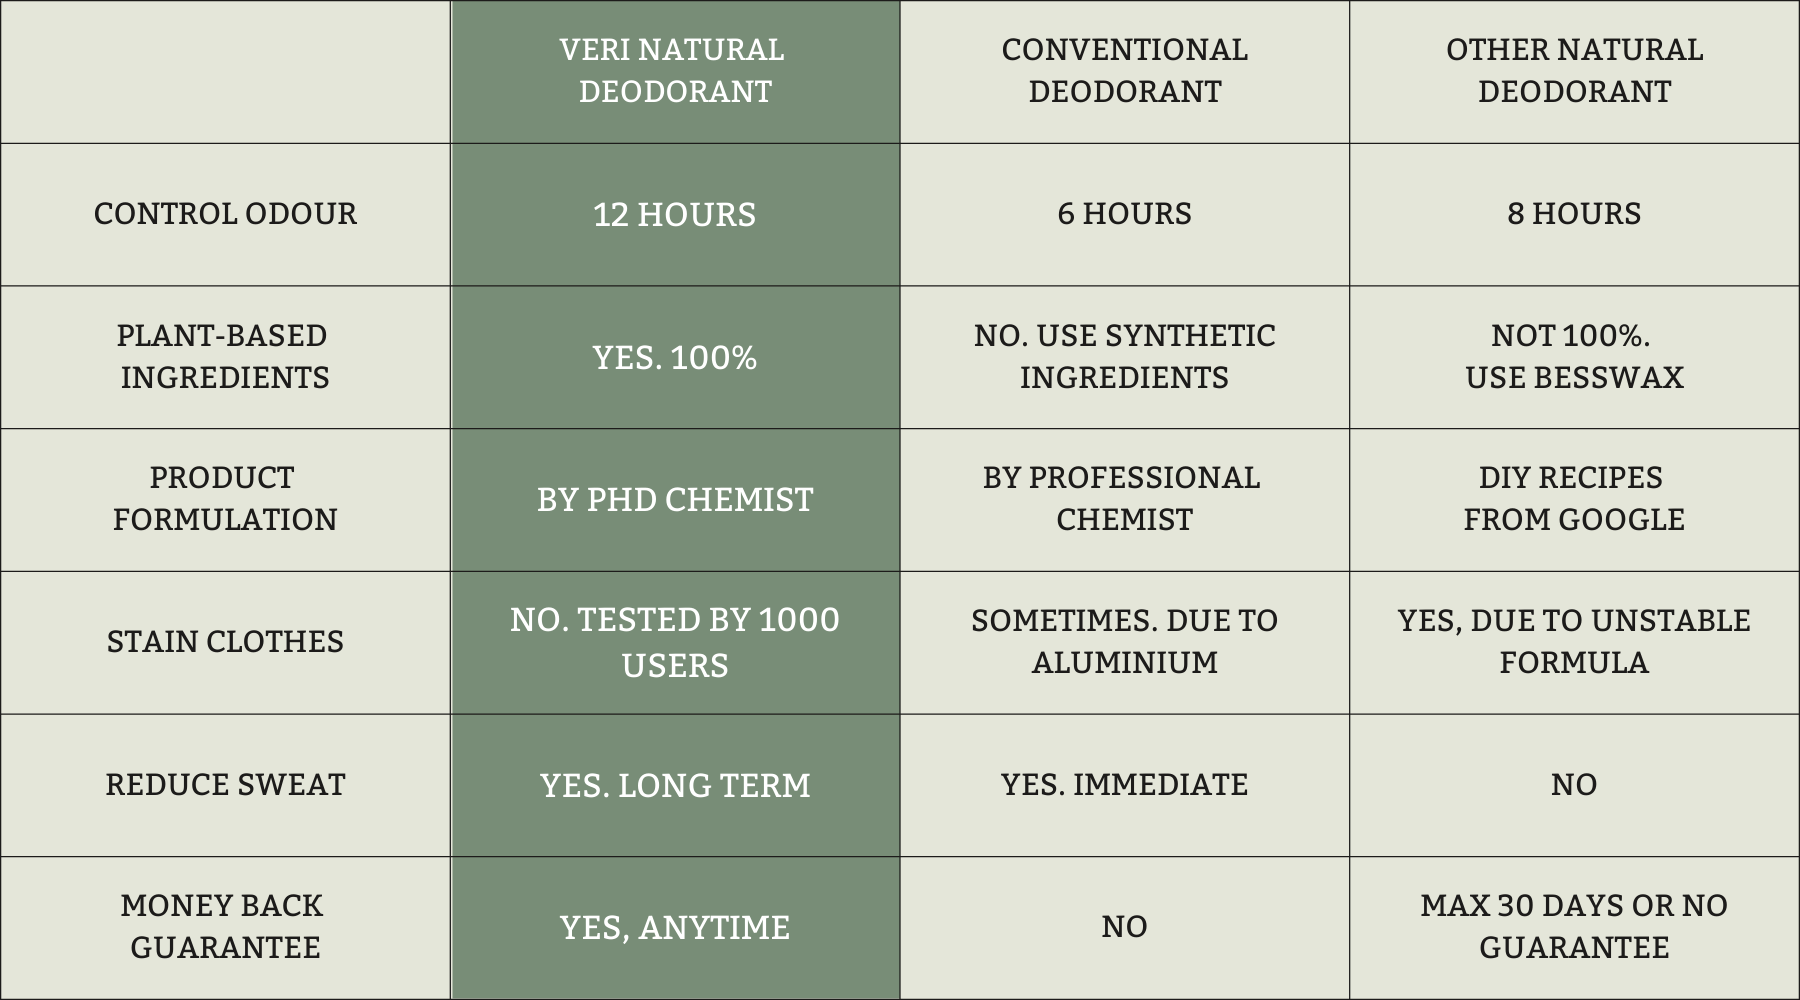 Veri Natural Deodorant vs Conventional comparison chart